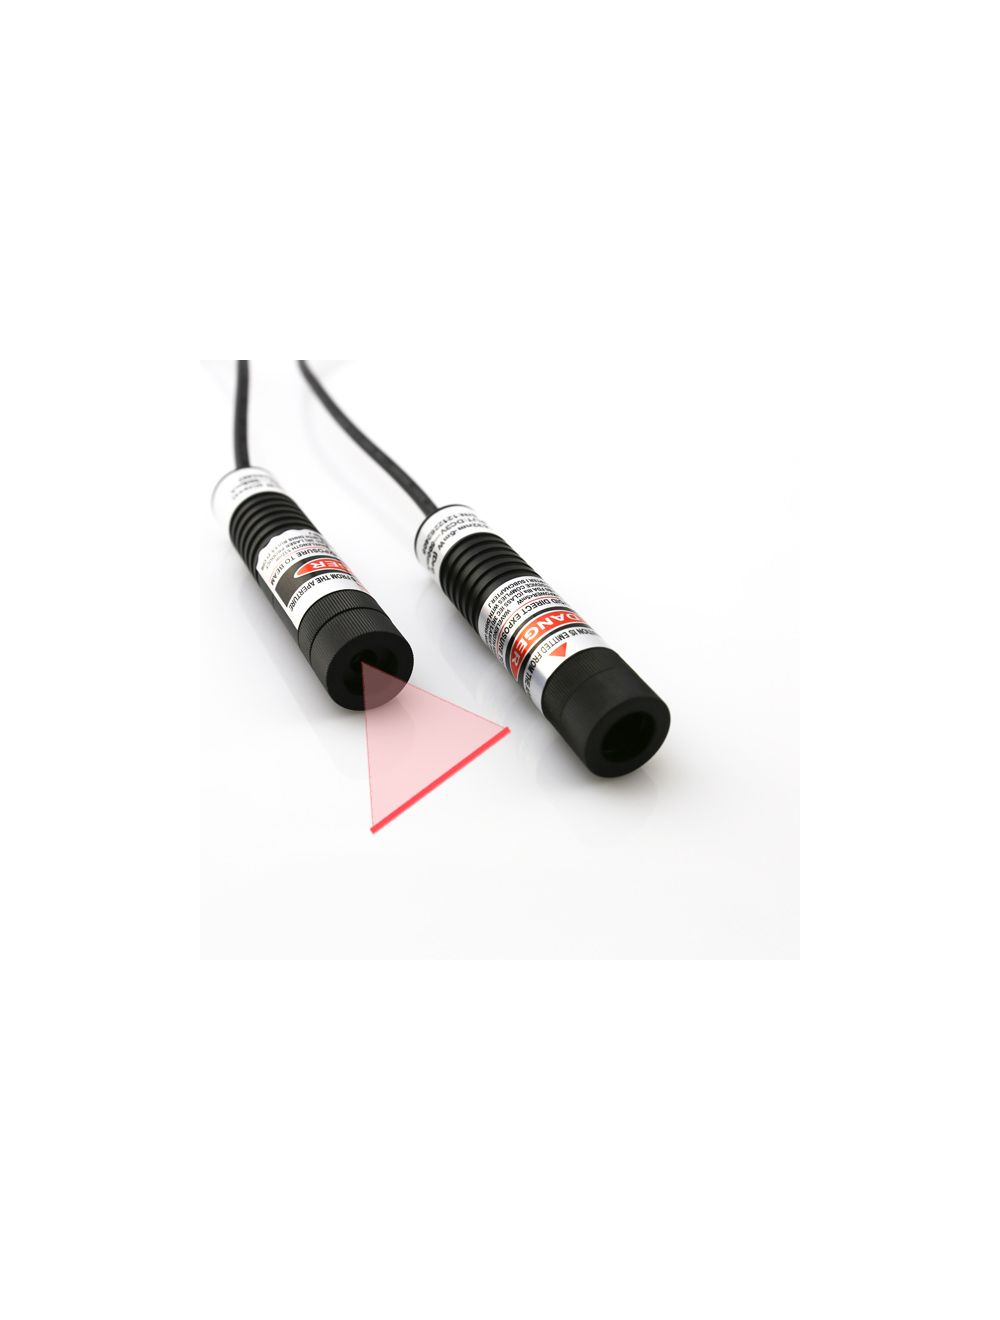 635nm Red Line Laser Diode Module, Focusable Laser Line Generator